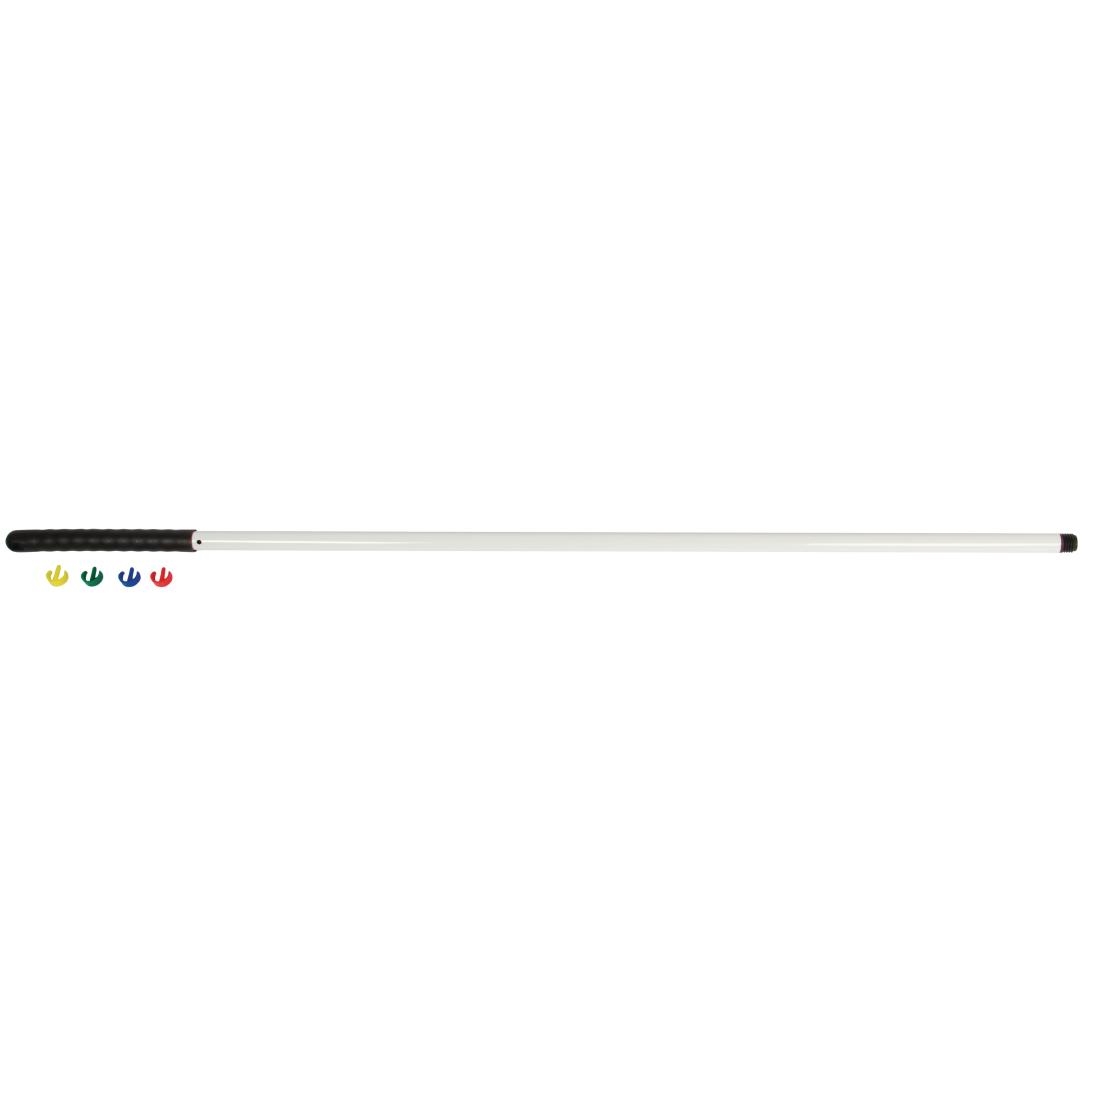 Mop Handle Screw Thread Colour Coded Clippex x1 YYCW0820L 